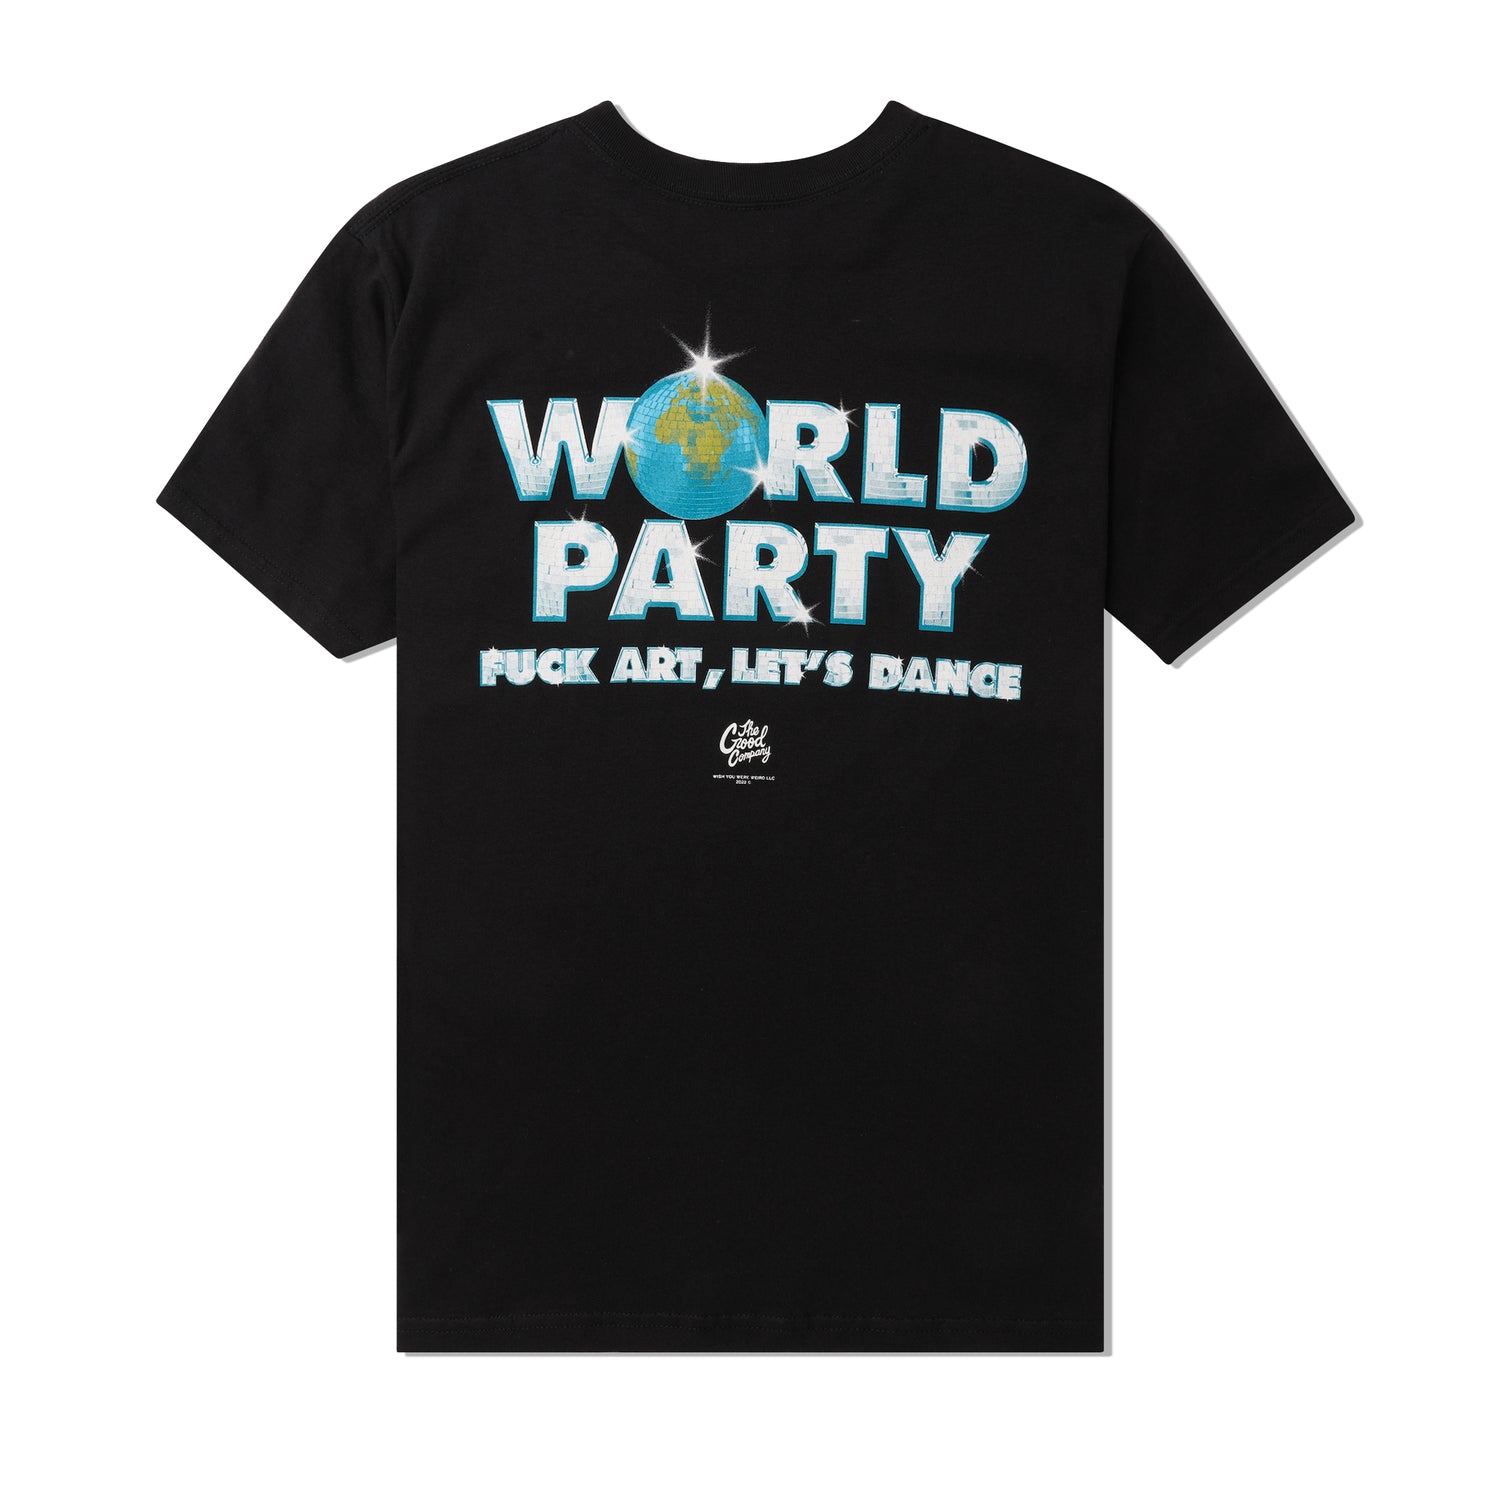 World Party Tee, Black